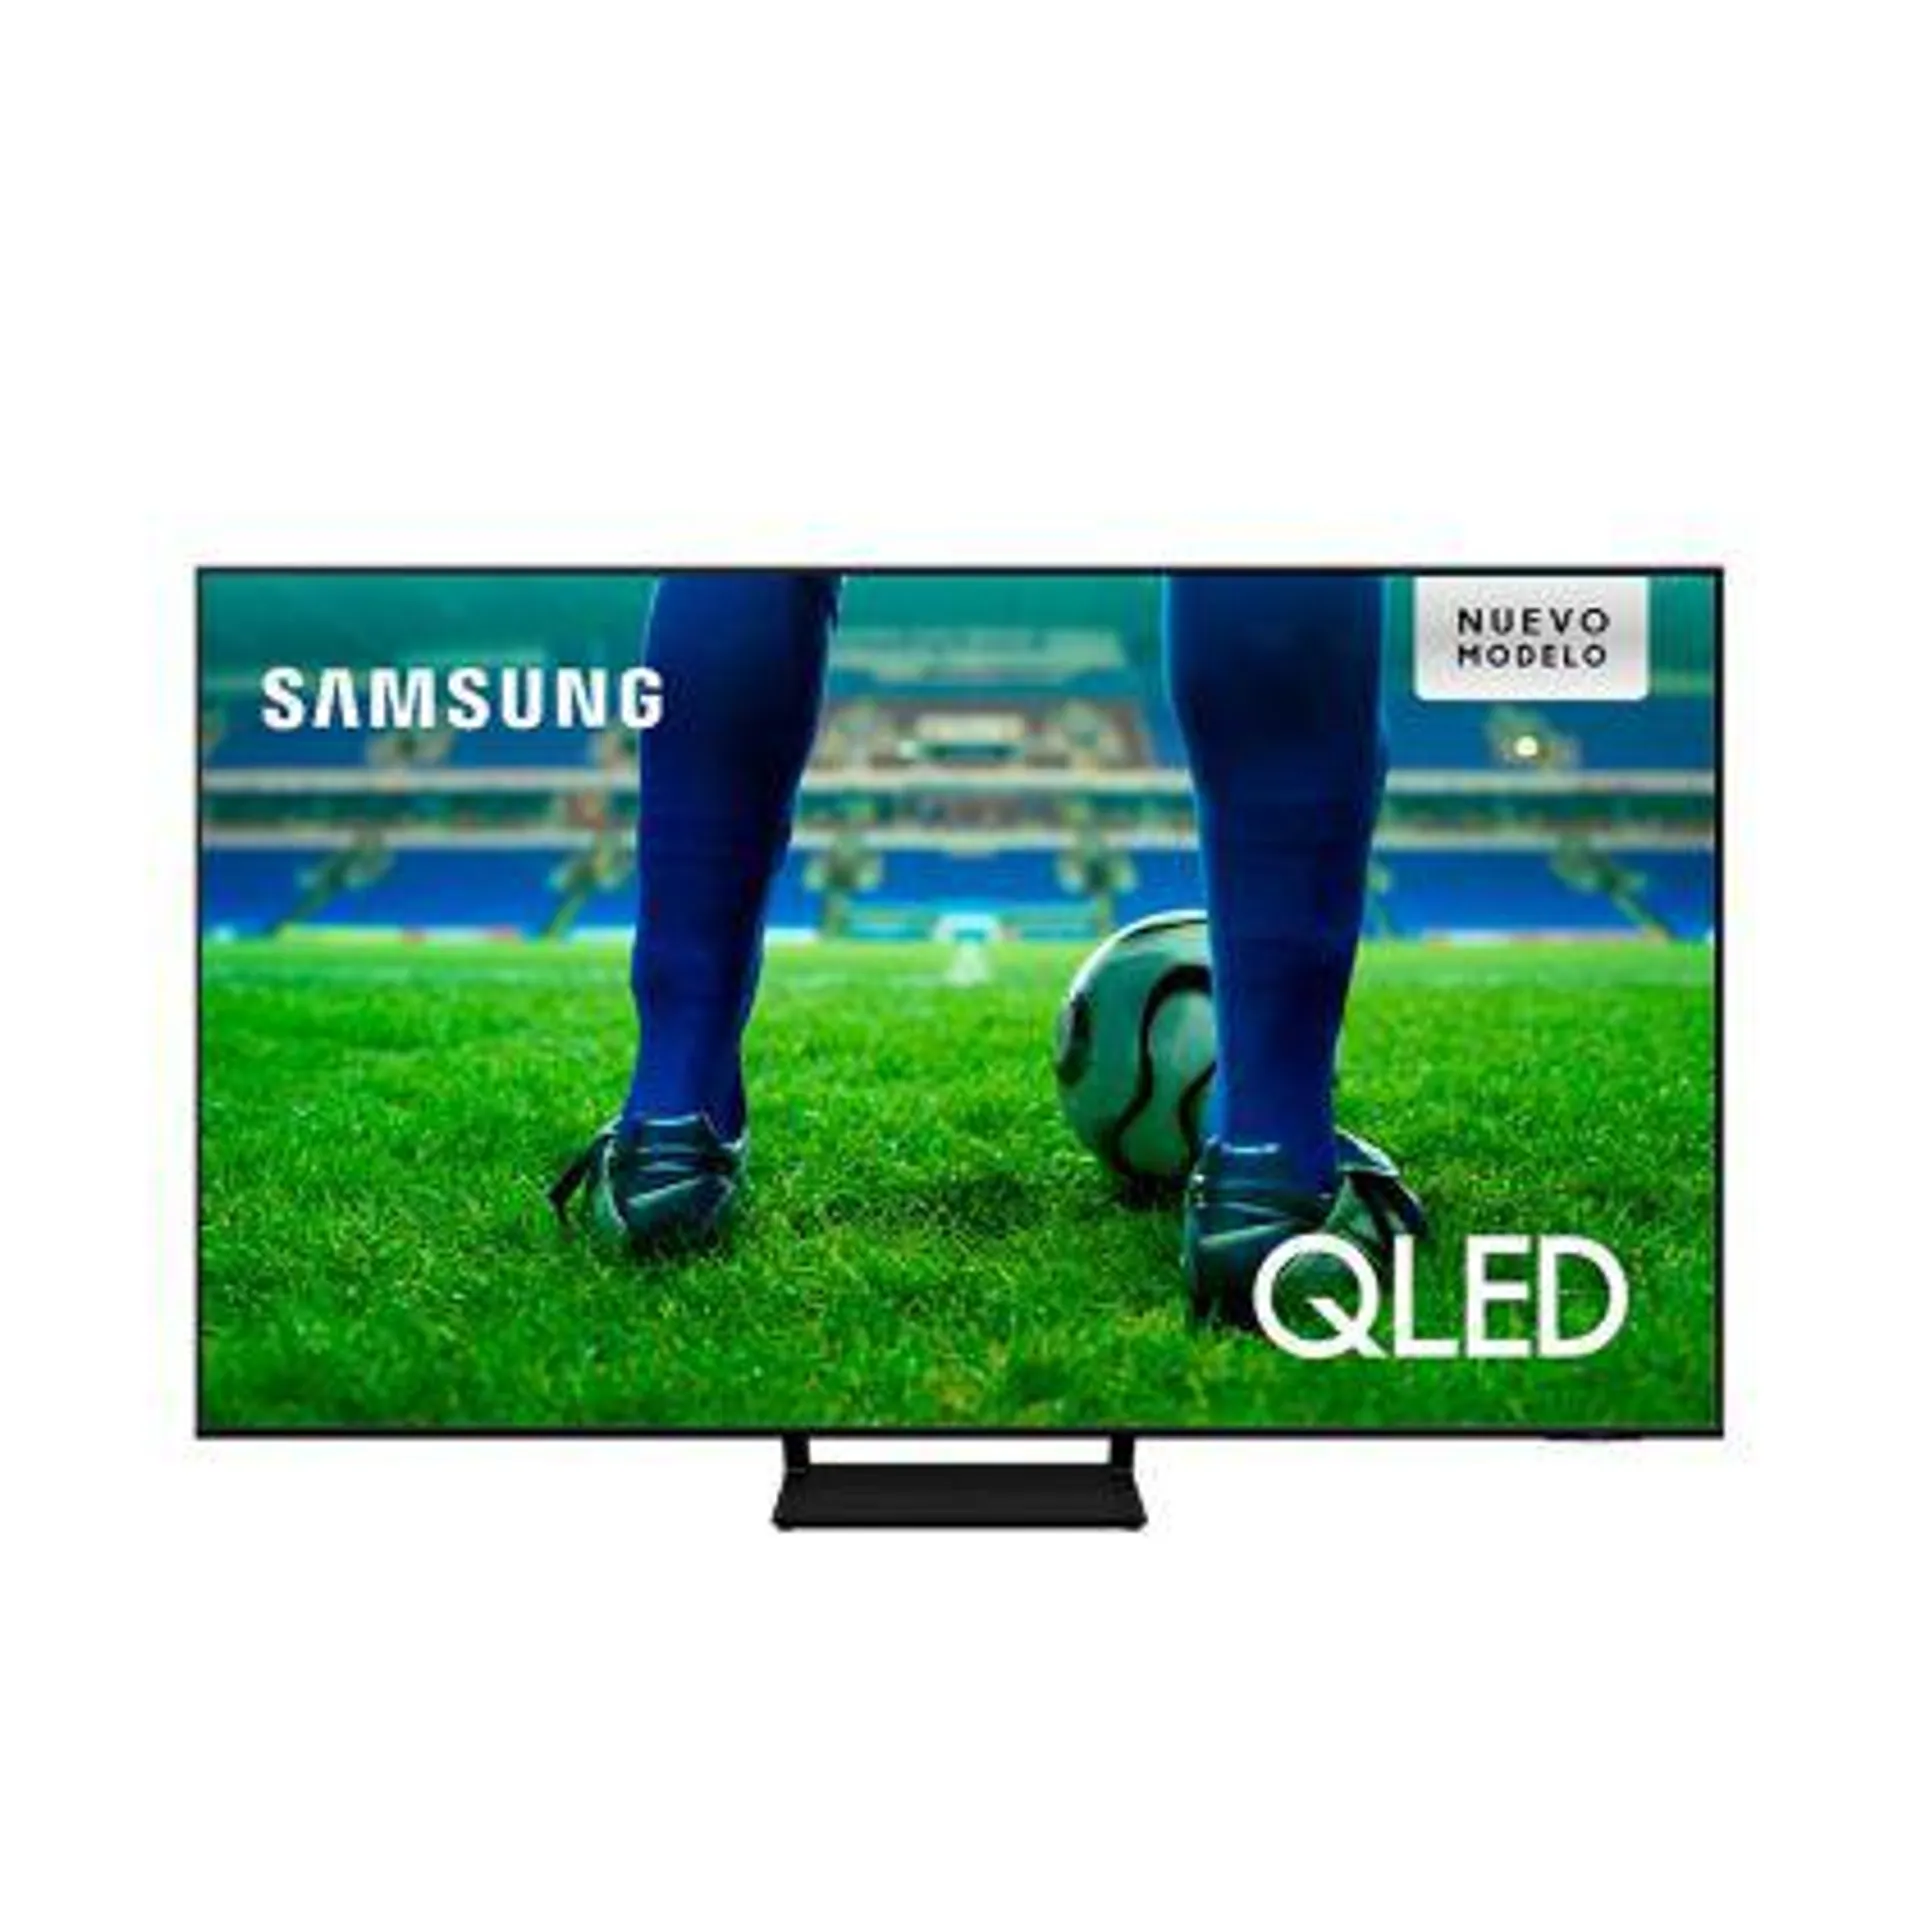 Televisor Samsung 43" Qled Uhd 4k Smart Plano Tv + Parlante Samsung Giga Party Led Bluetooth Usb 240w